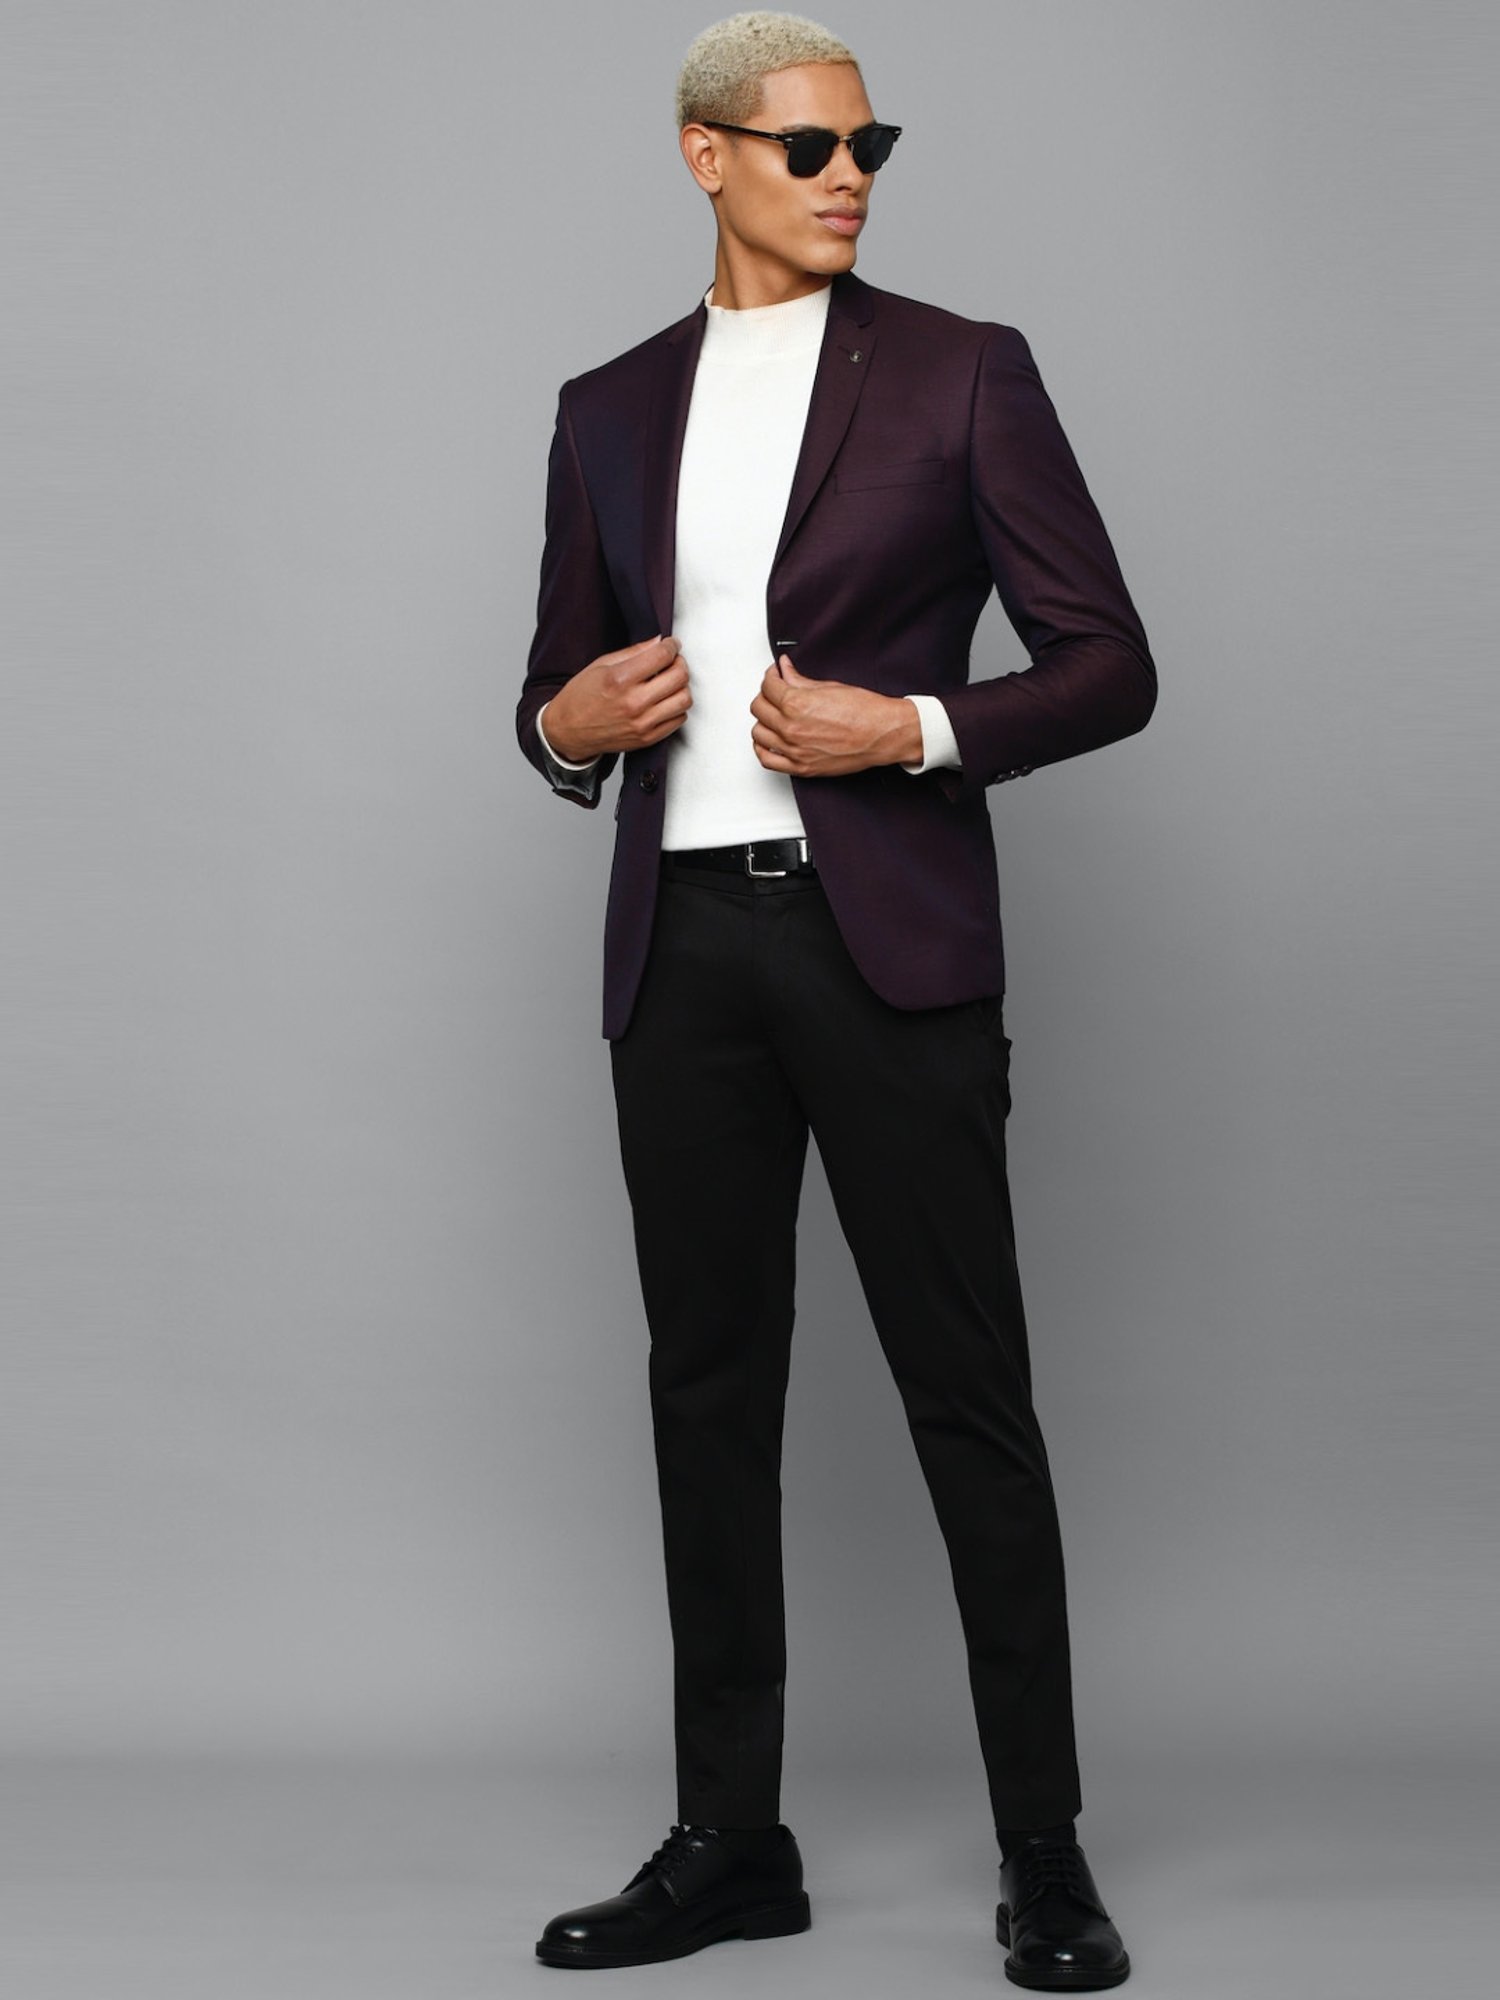 Maroon Blazer Matching Shirt and Pant Ideas | Maroon Blazer Combination Men  - TiptopGents | Blazer outfits men, Maroon blazer, Burgundy blazer outfit